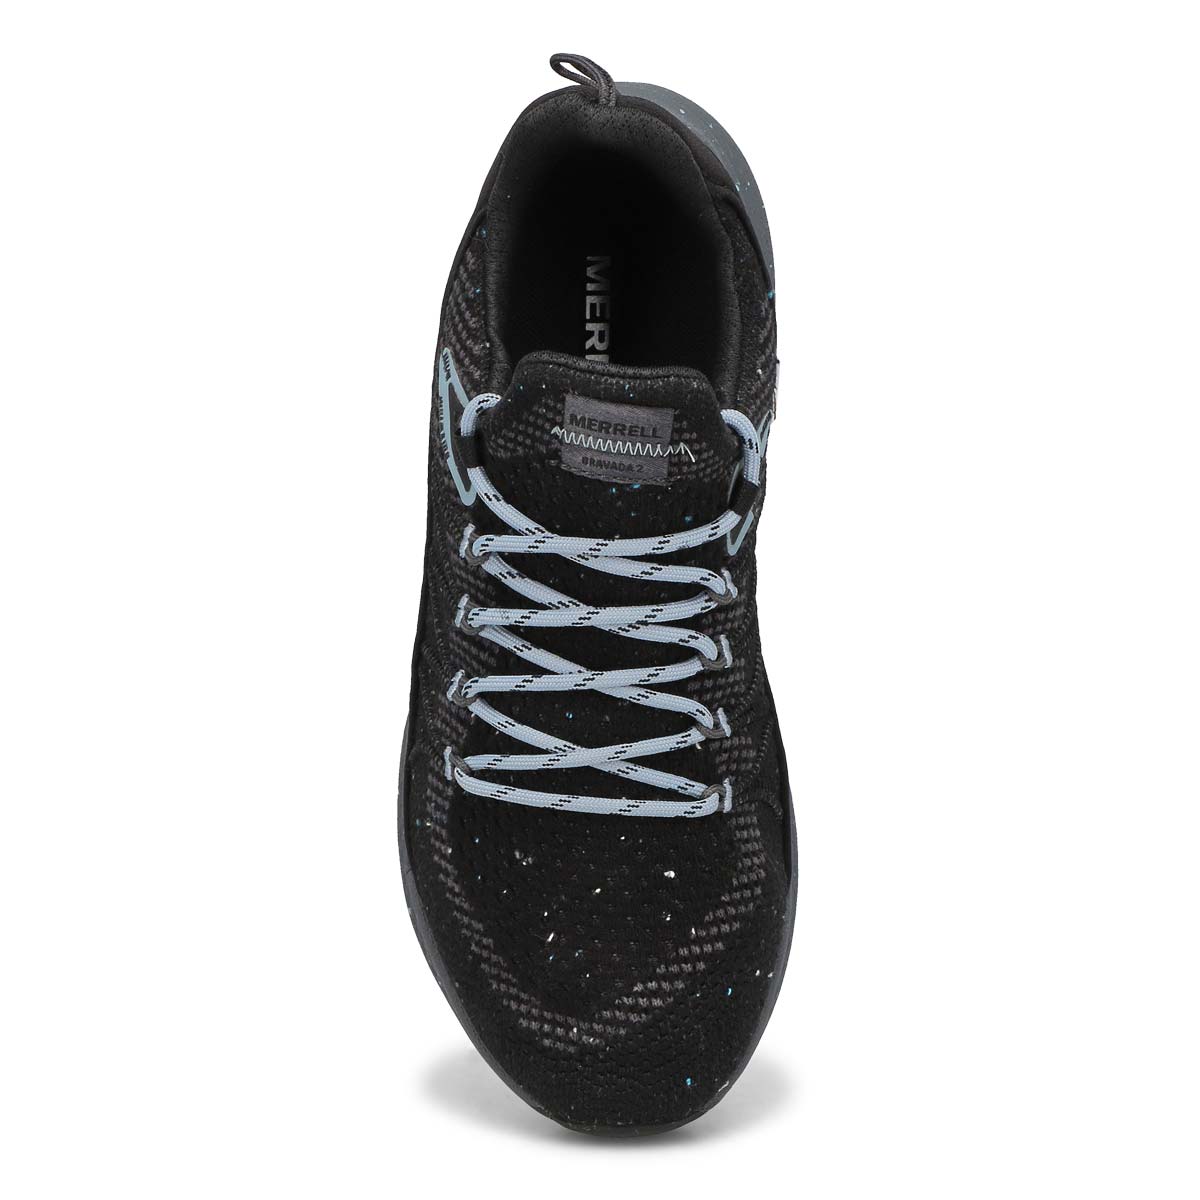 Merrell Bravada Mid J002506 Gray White Hiking Shoes Boots Women's